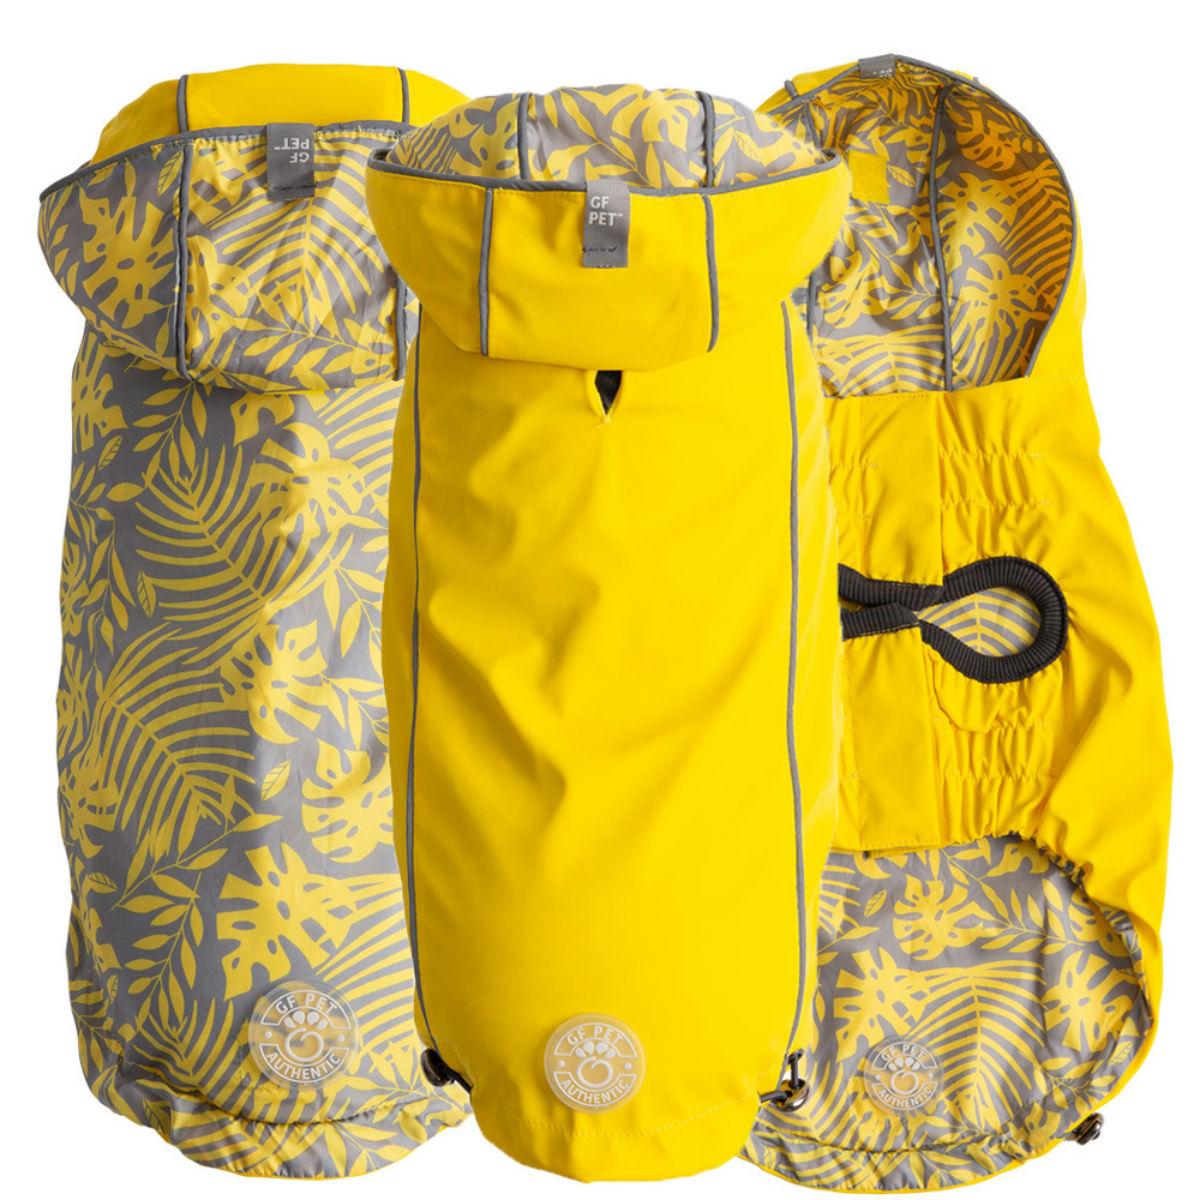 GF Pet Reversible Elasto-Fit Dog Raincoat - Yellow